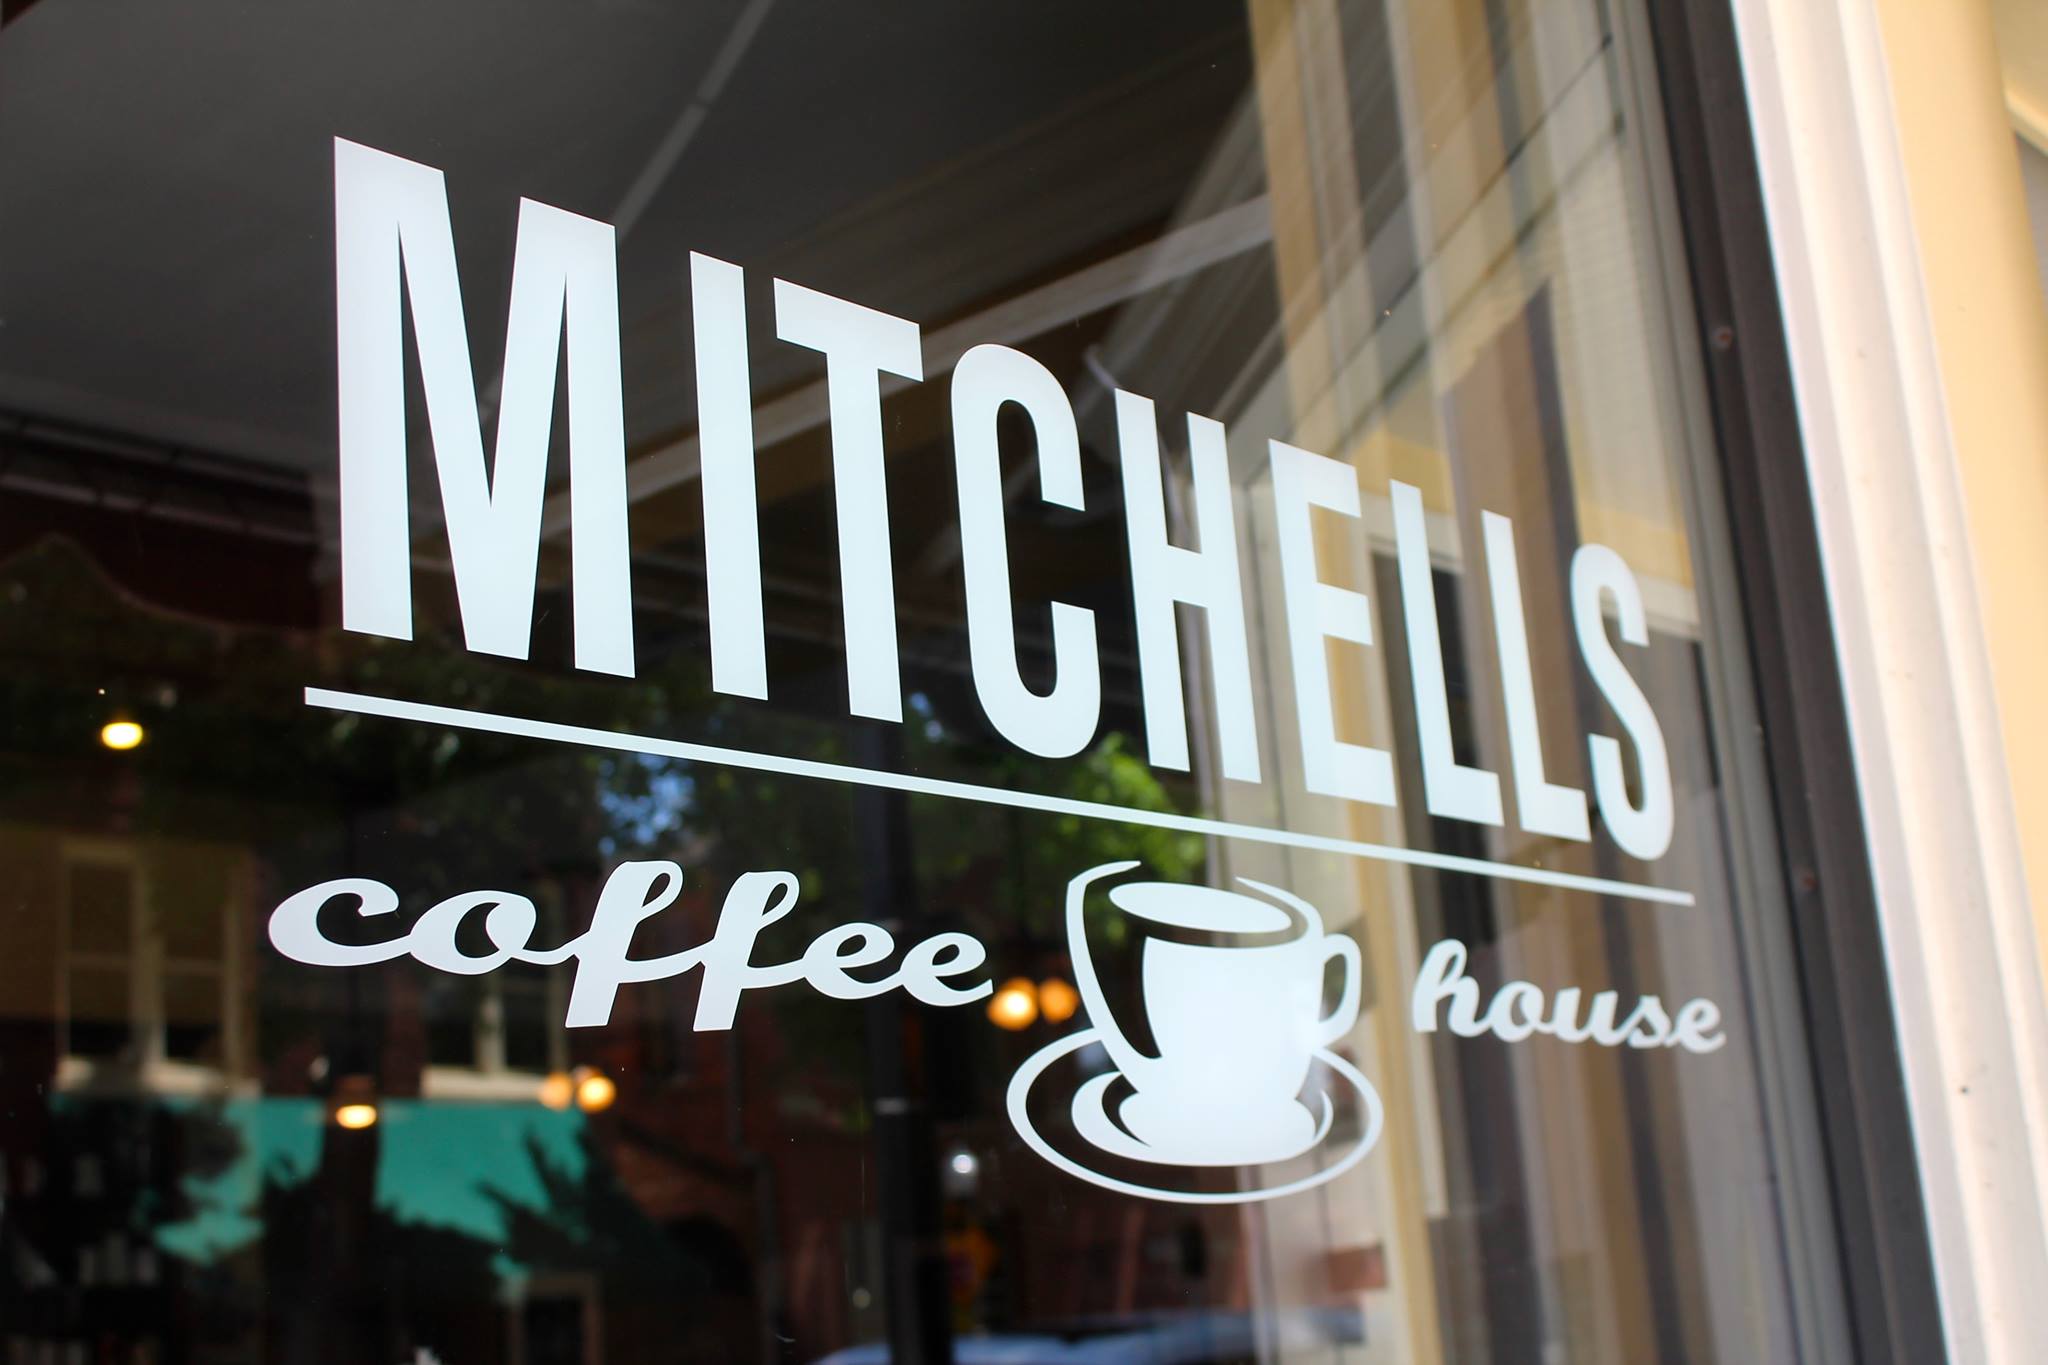 Mitchell's Coffee House store window